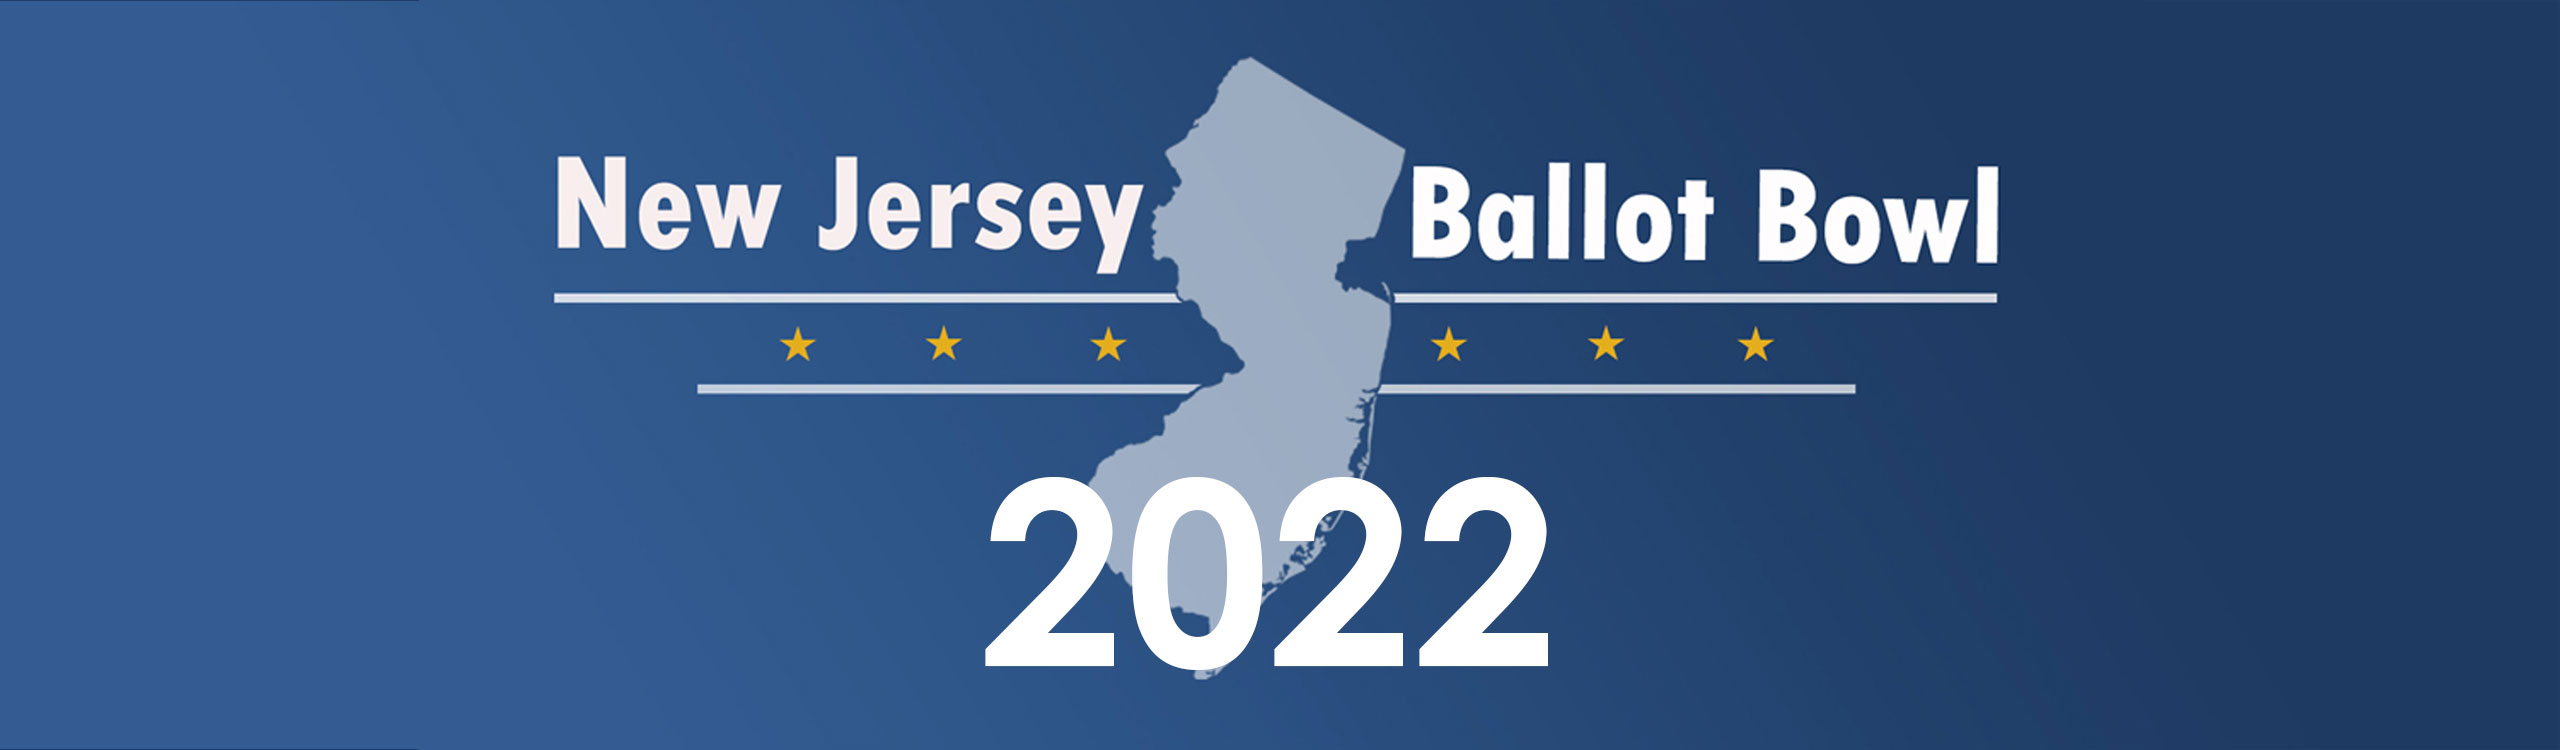 New Jersey Ballot Bowl 2022